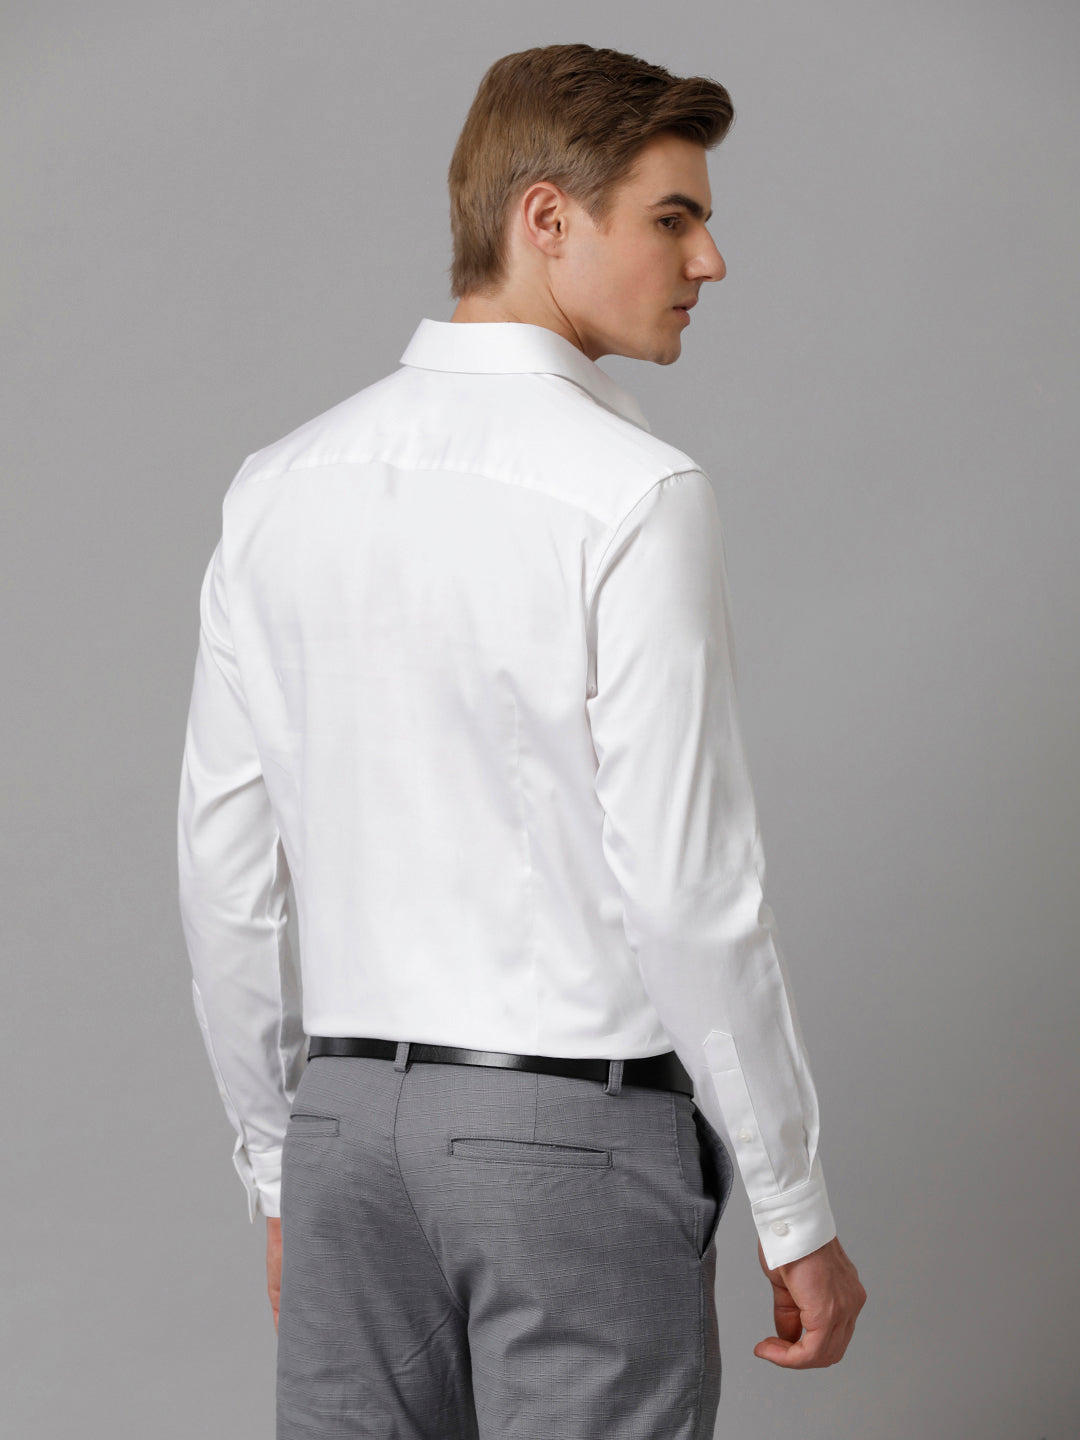 Aldeno Men Solid Formal White Shirt For men